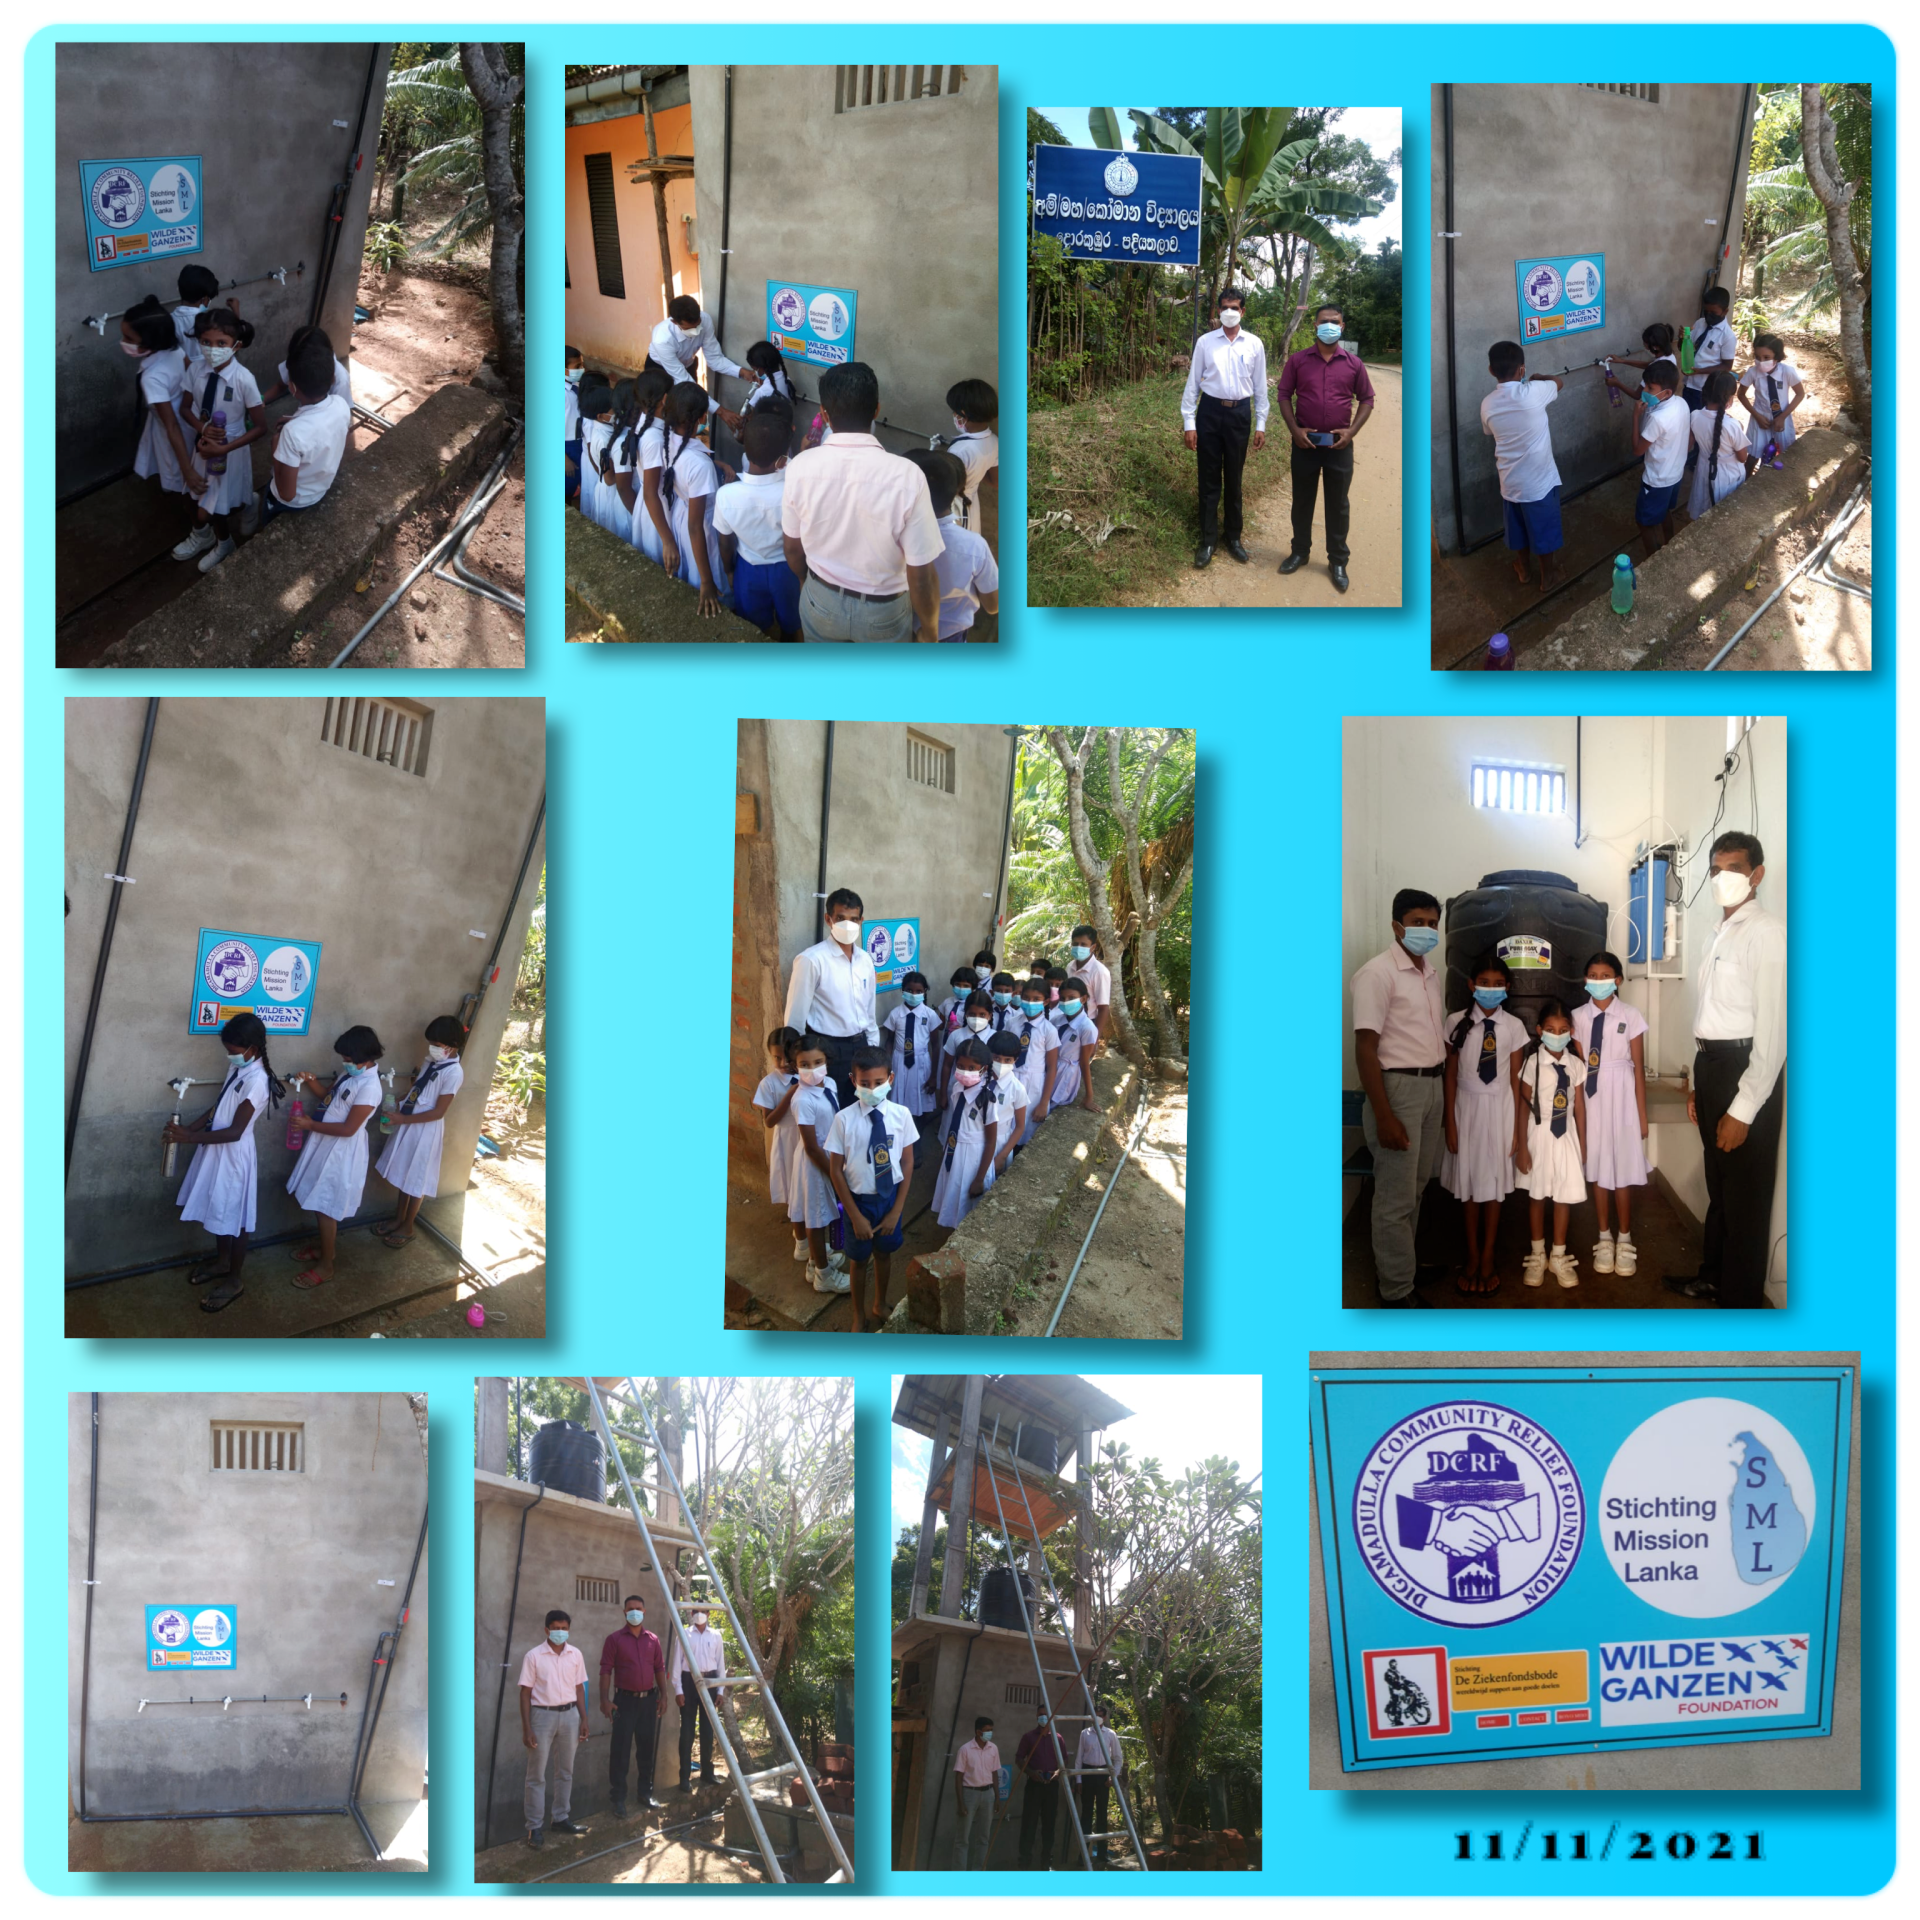 Opening  van de project  voor scone drinkwatervoorziening, Komana Vidyalaya, padiyathalawa, Ampara 11/11/2021